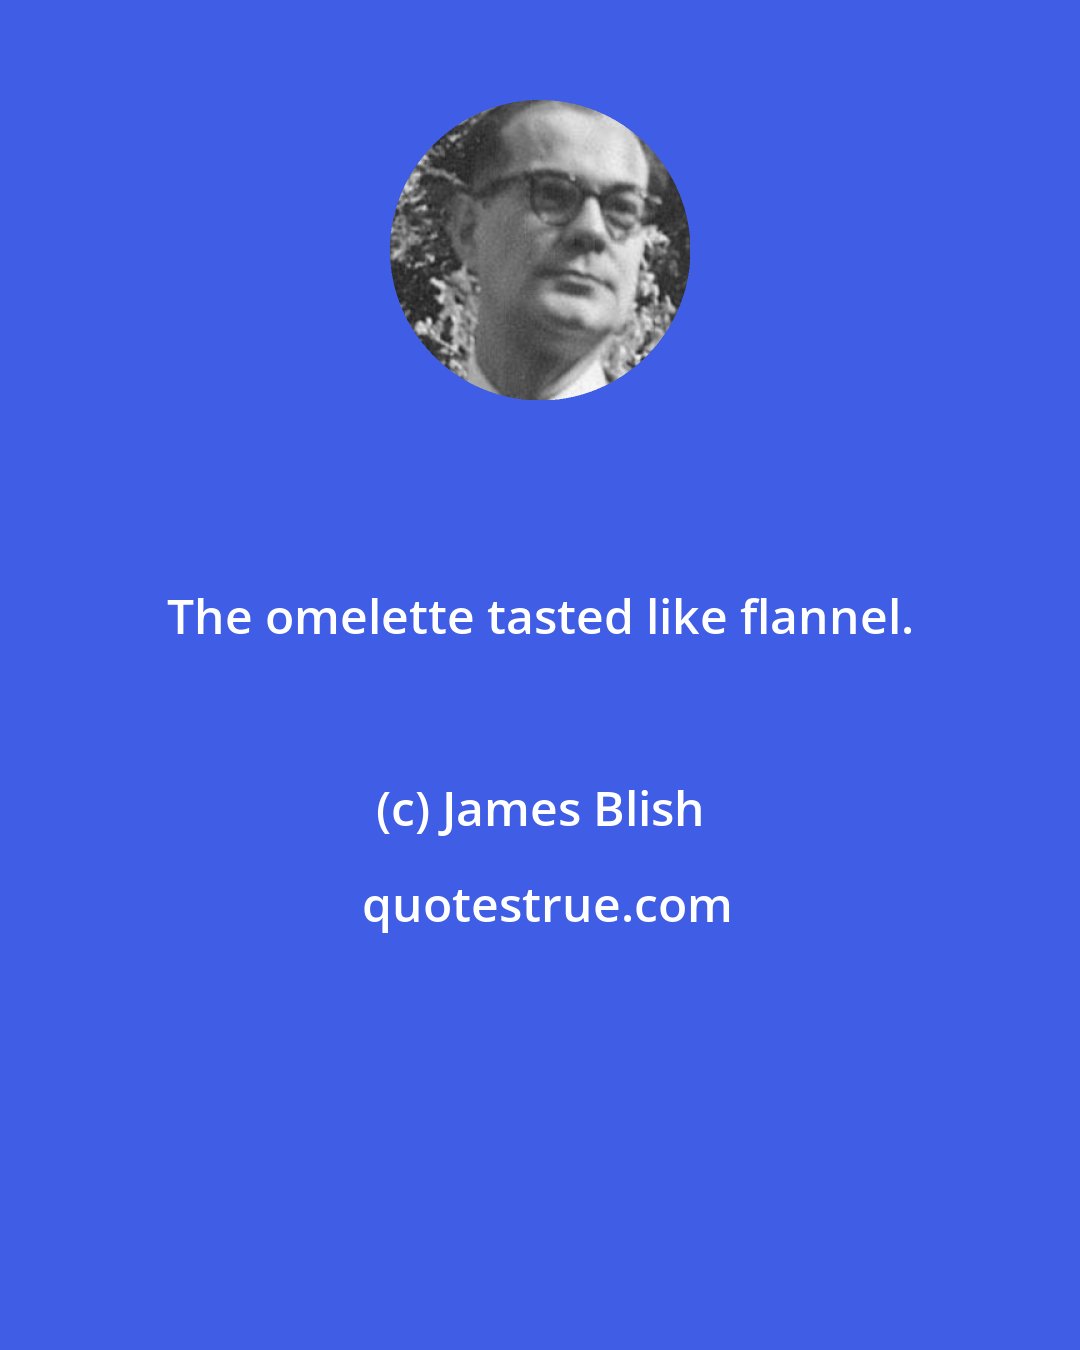 James Blish: The omelette tasted like flannel.